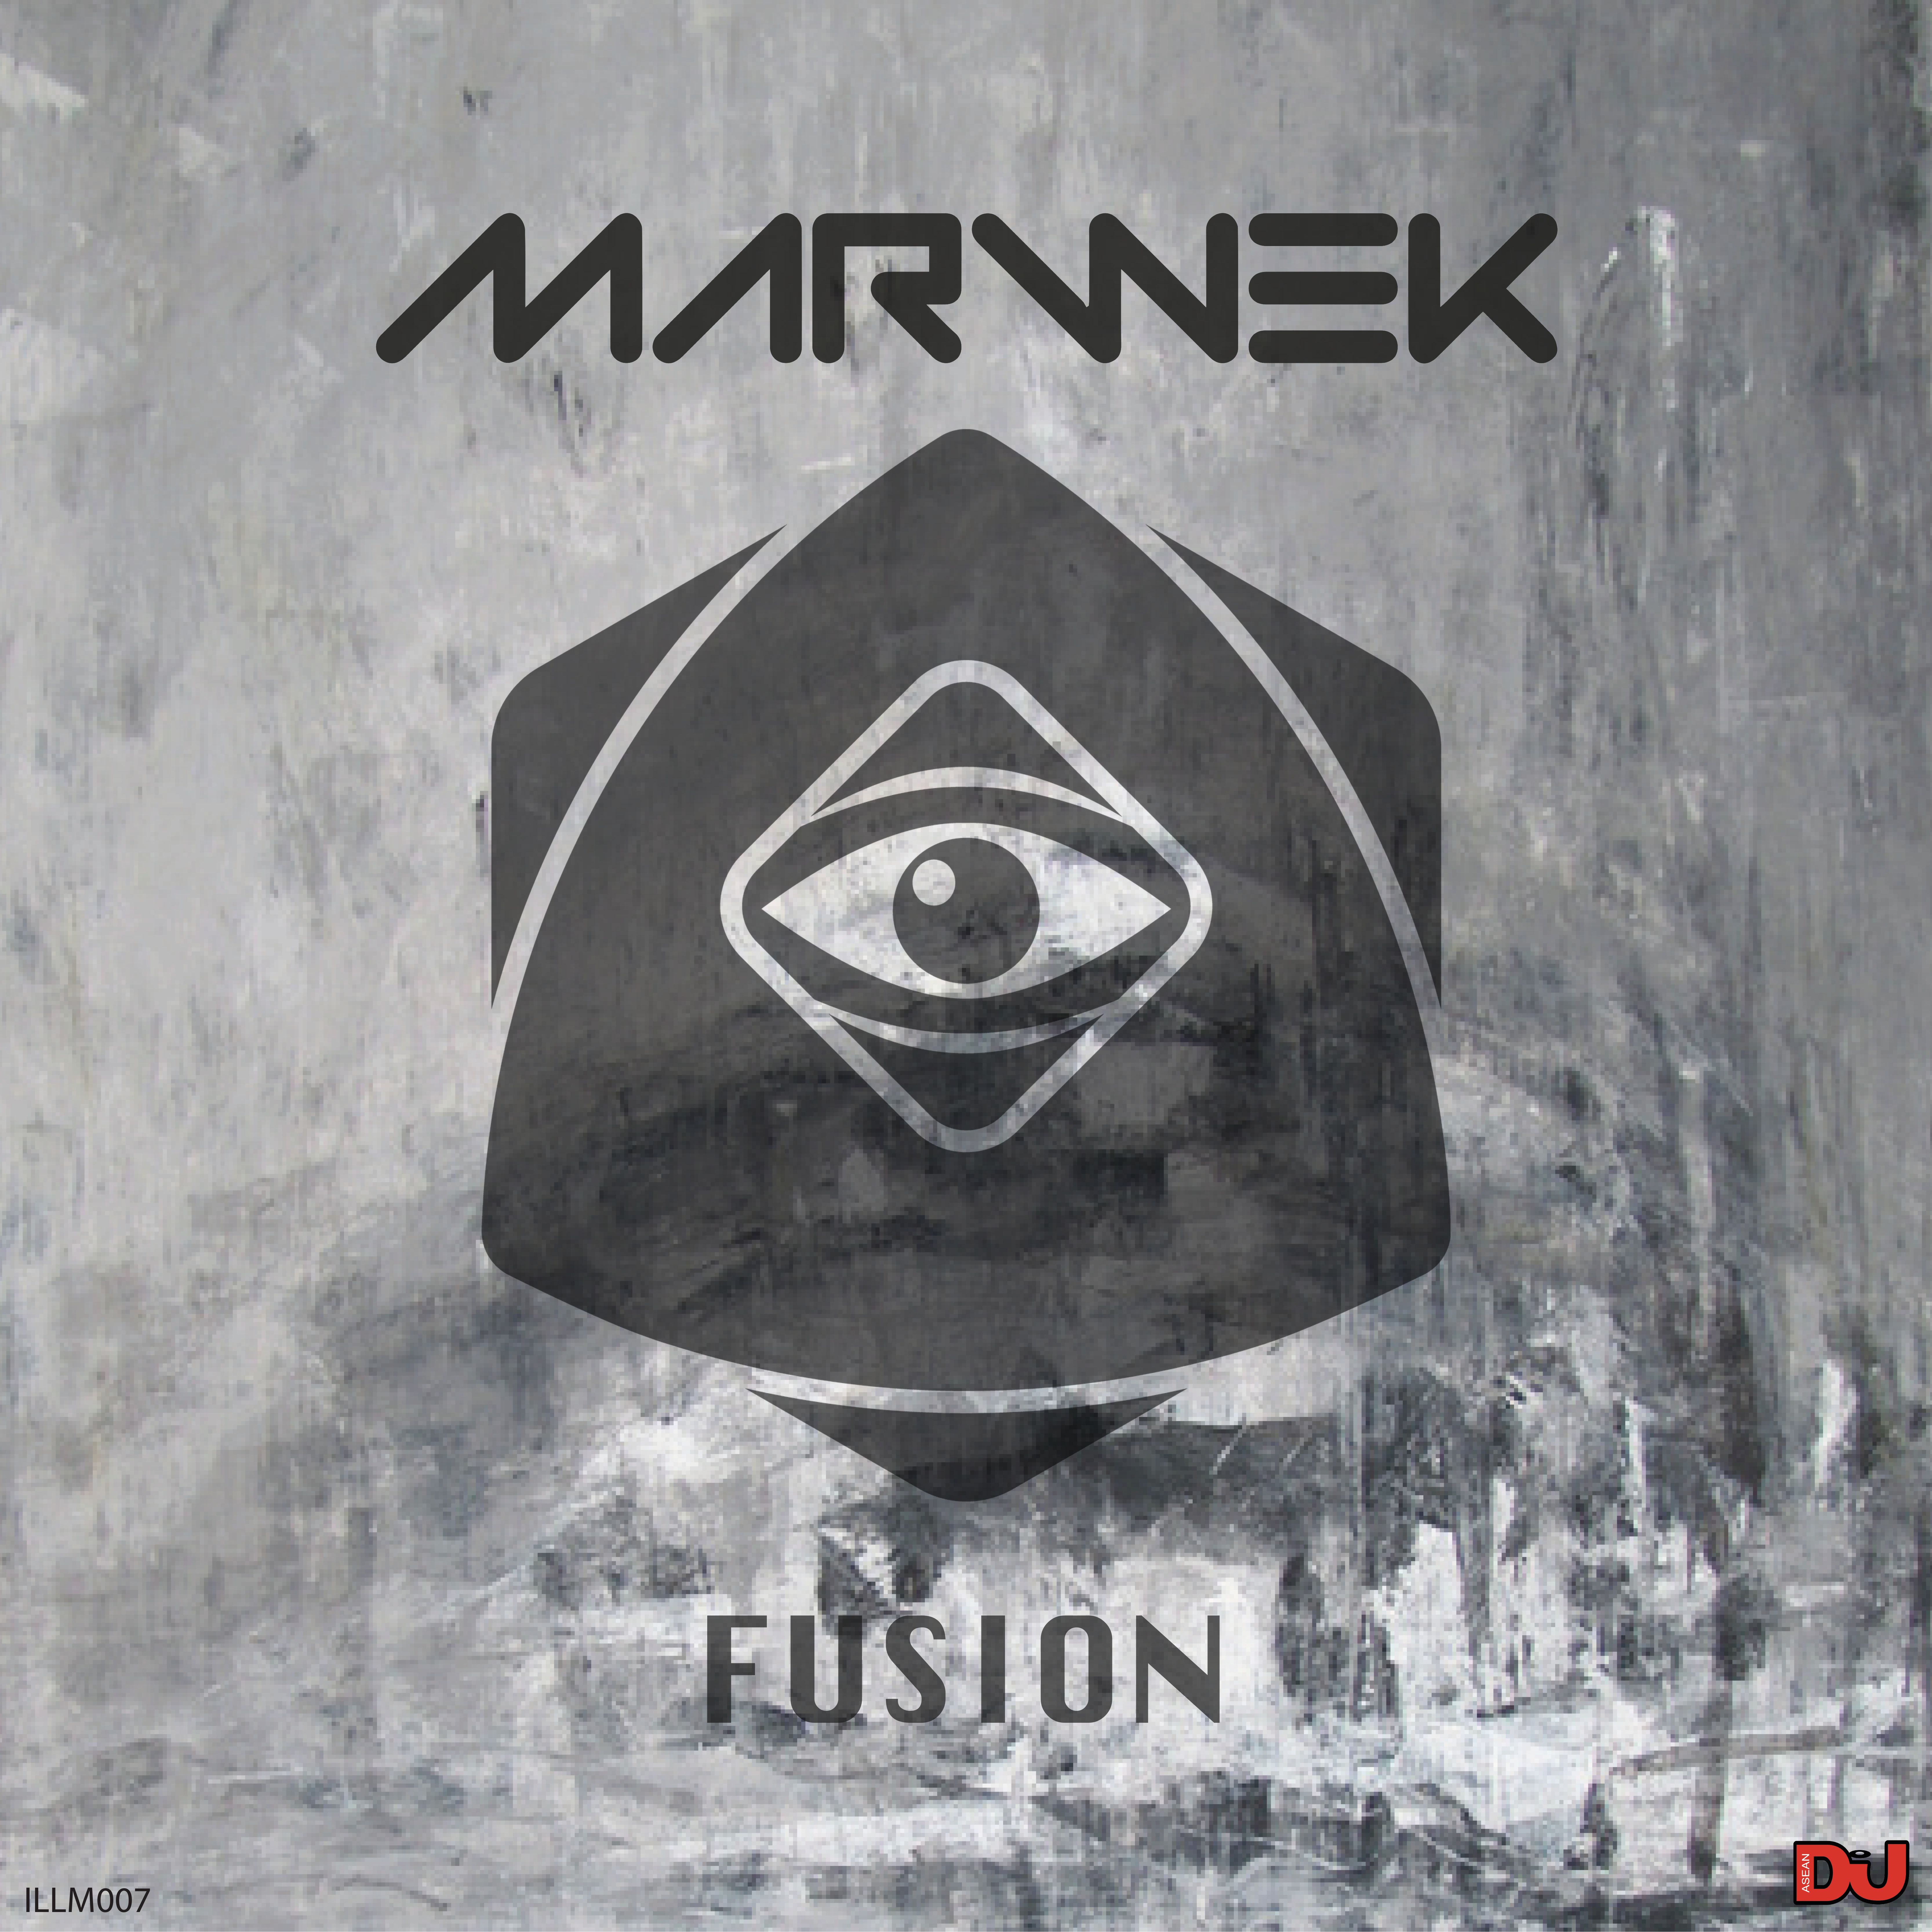 Letöltés Marwek - Fusion (Original Mix)